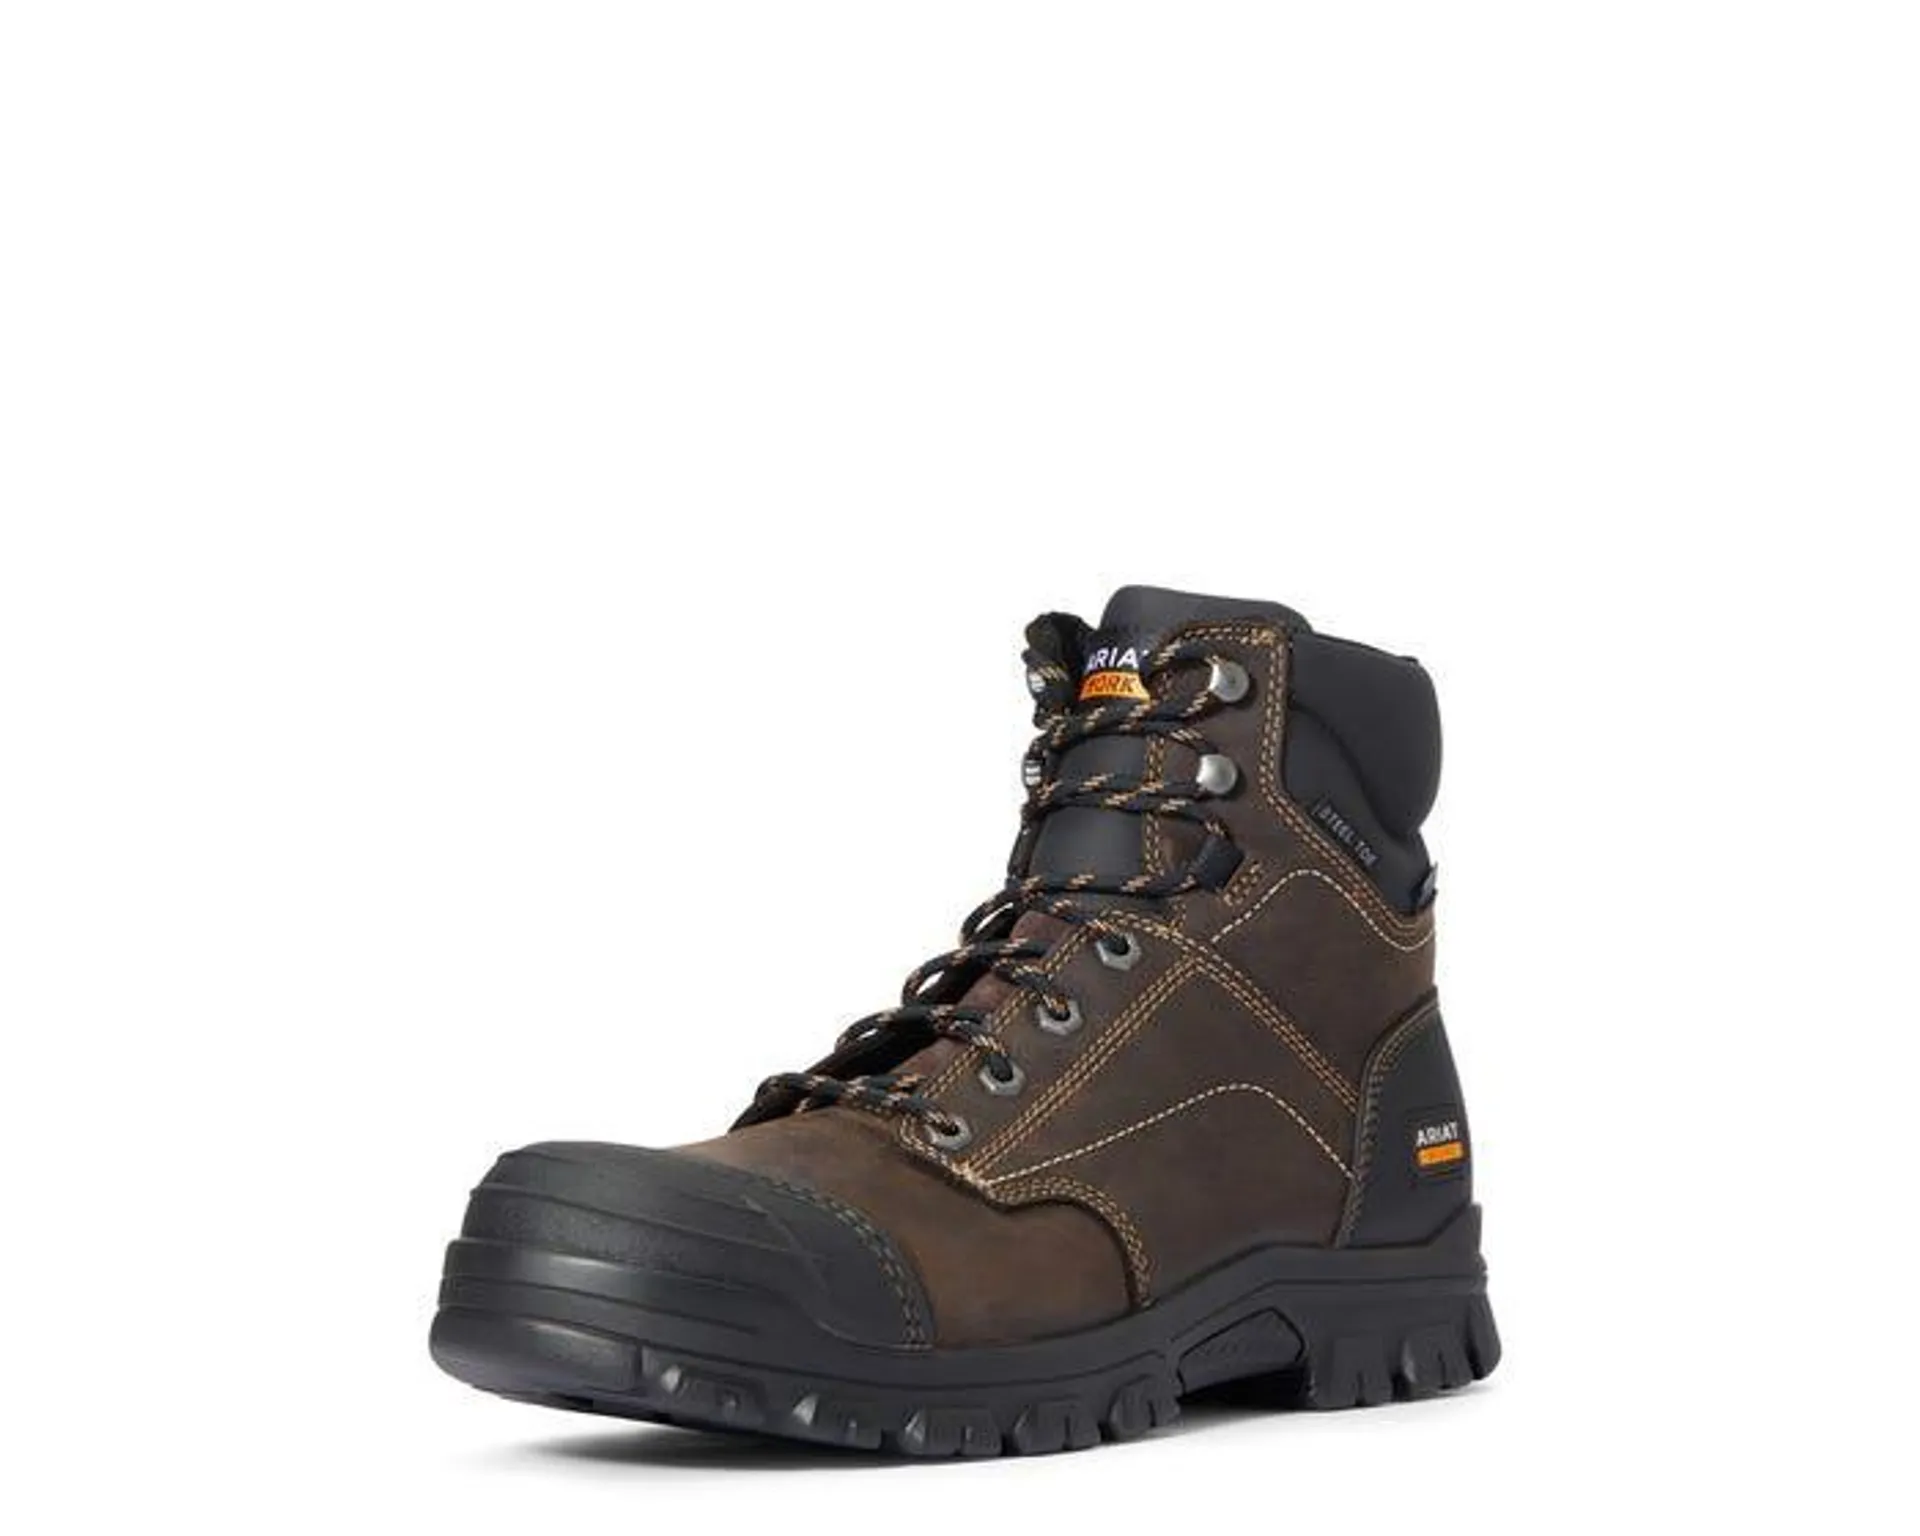 Ariat Men's Treadfast 6" Waterproof Steel Toe Work Boot Dark Brown - 10034673